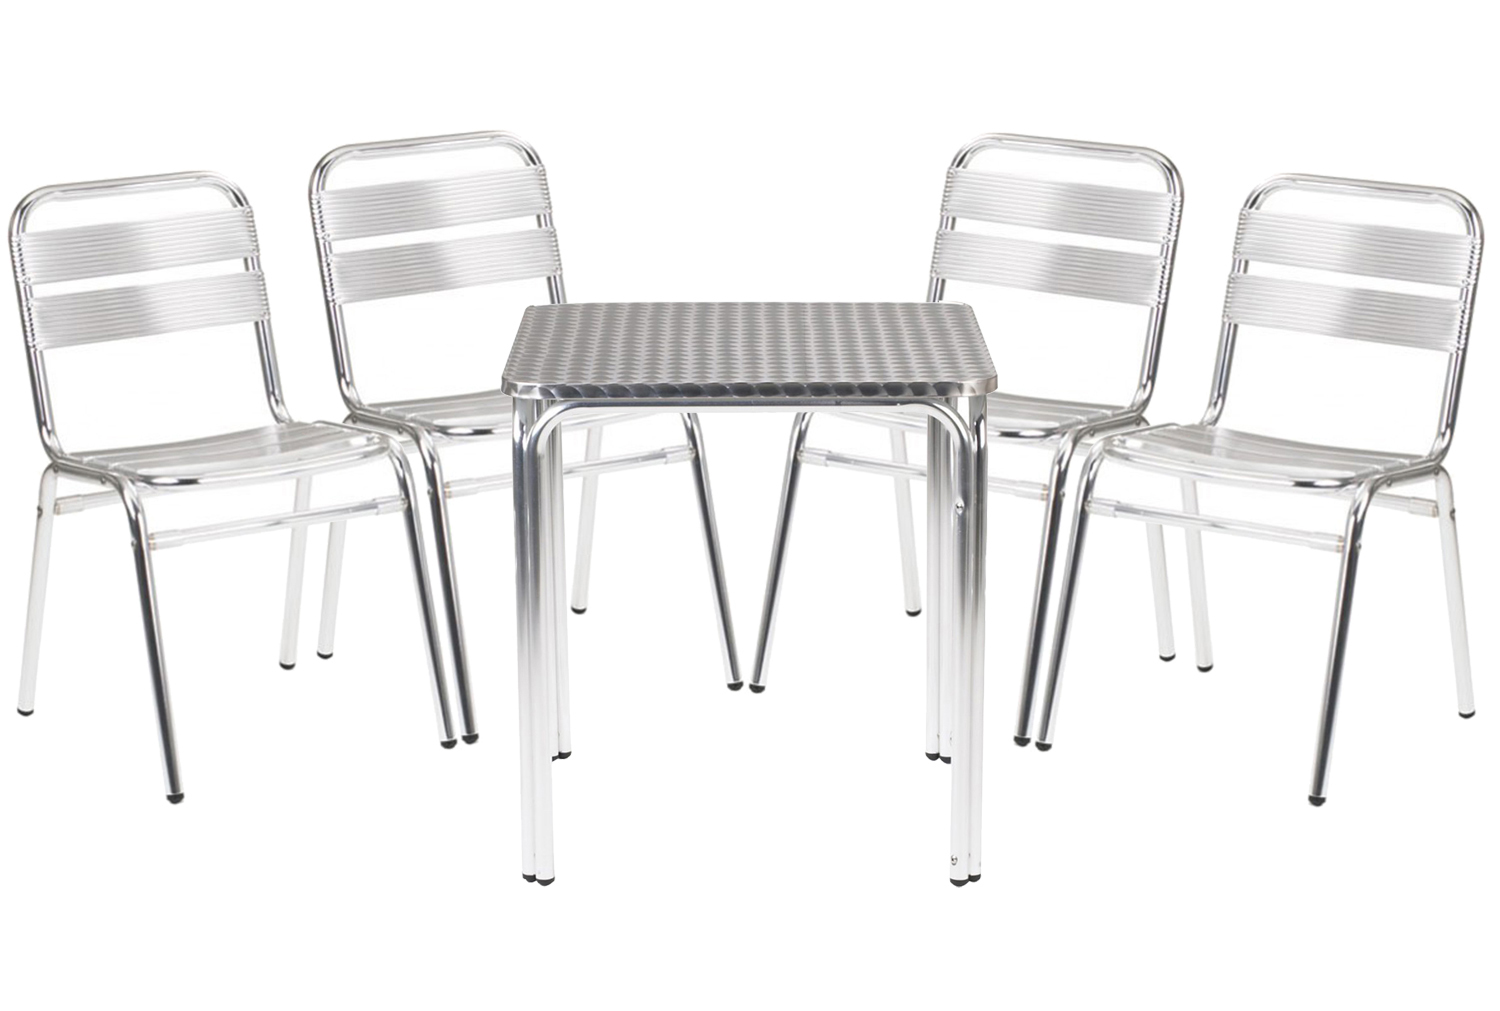 Rio Aluminium Square Table And 4 Chairs